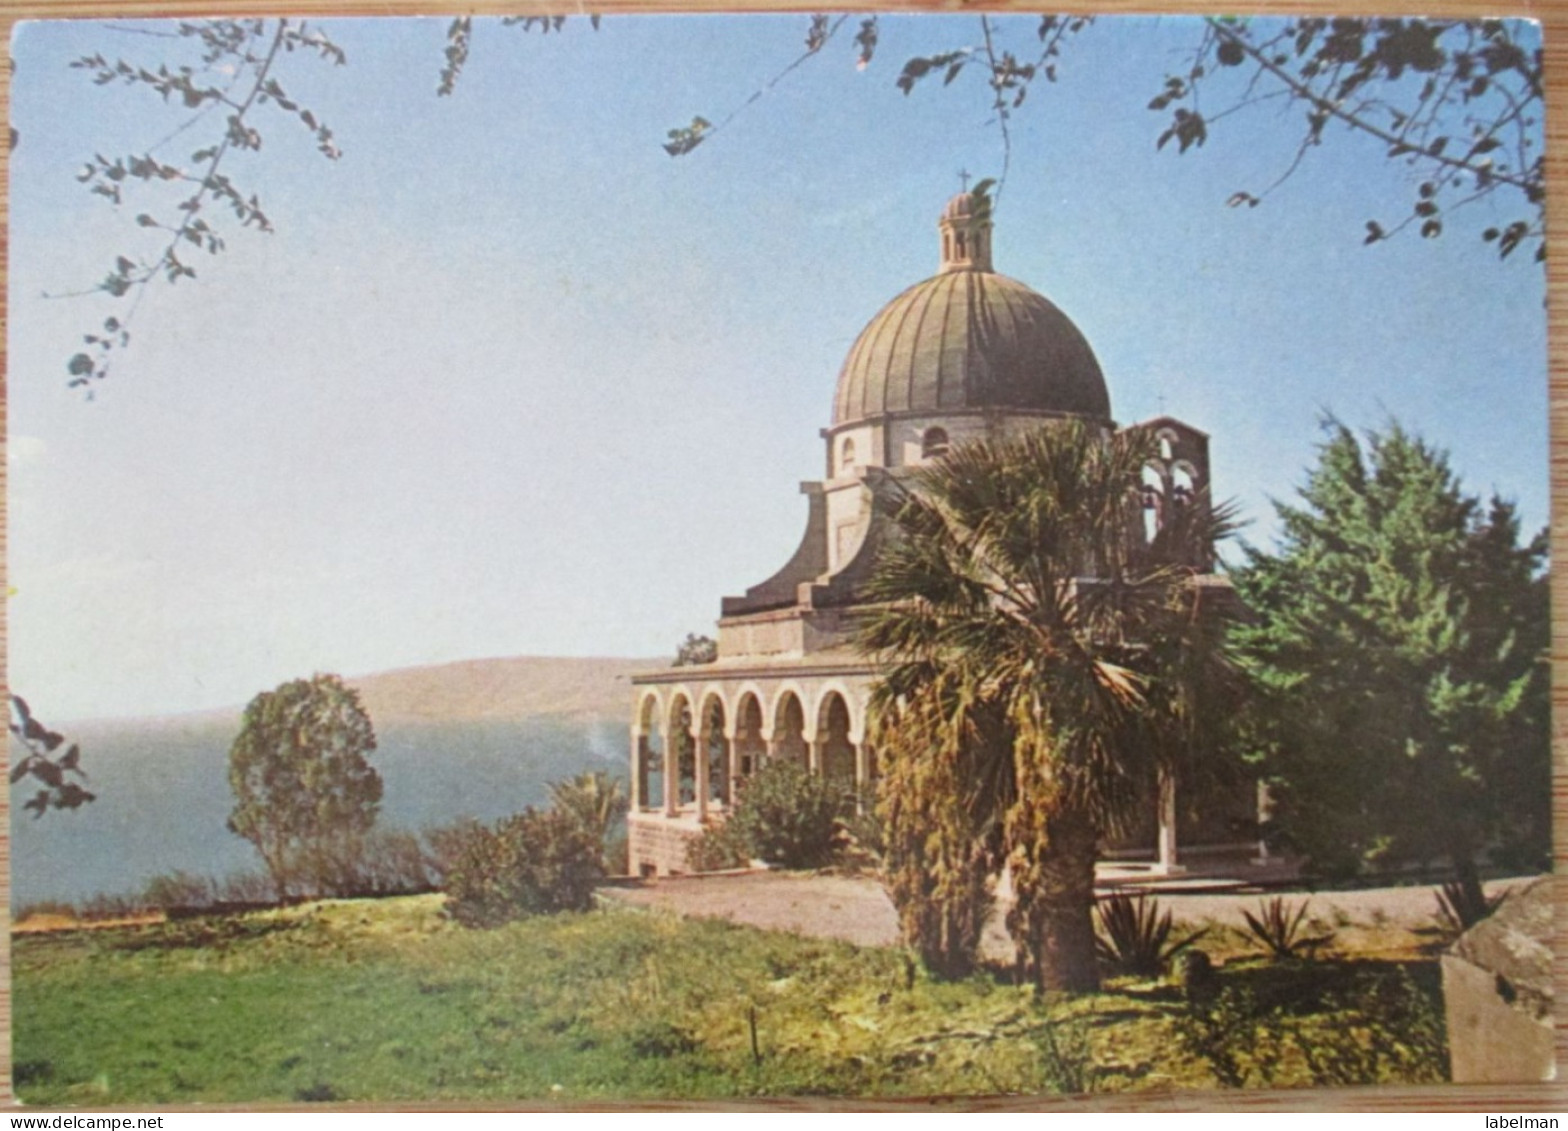 ISRAEL TIBERIAS GALILEE SEA CHURCH BEATITUDES MOUNT POSTCARD CARTE POSTALE ANSICHTSKARTE CARTOLINA KARTE CARD PC - Israël